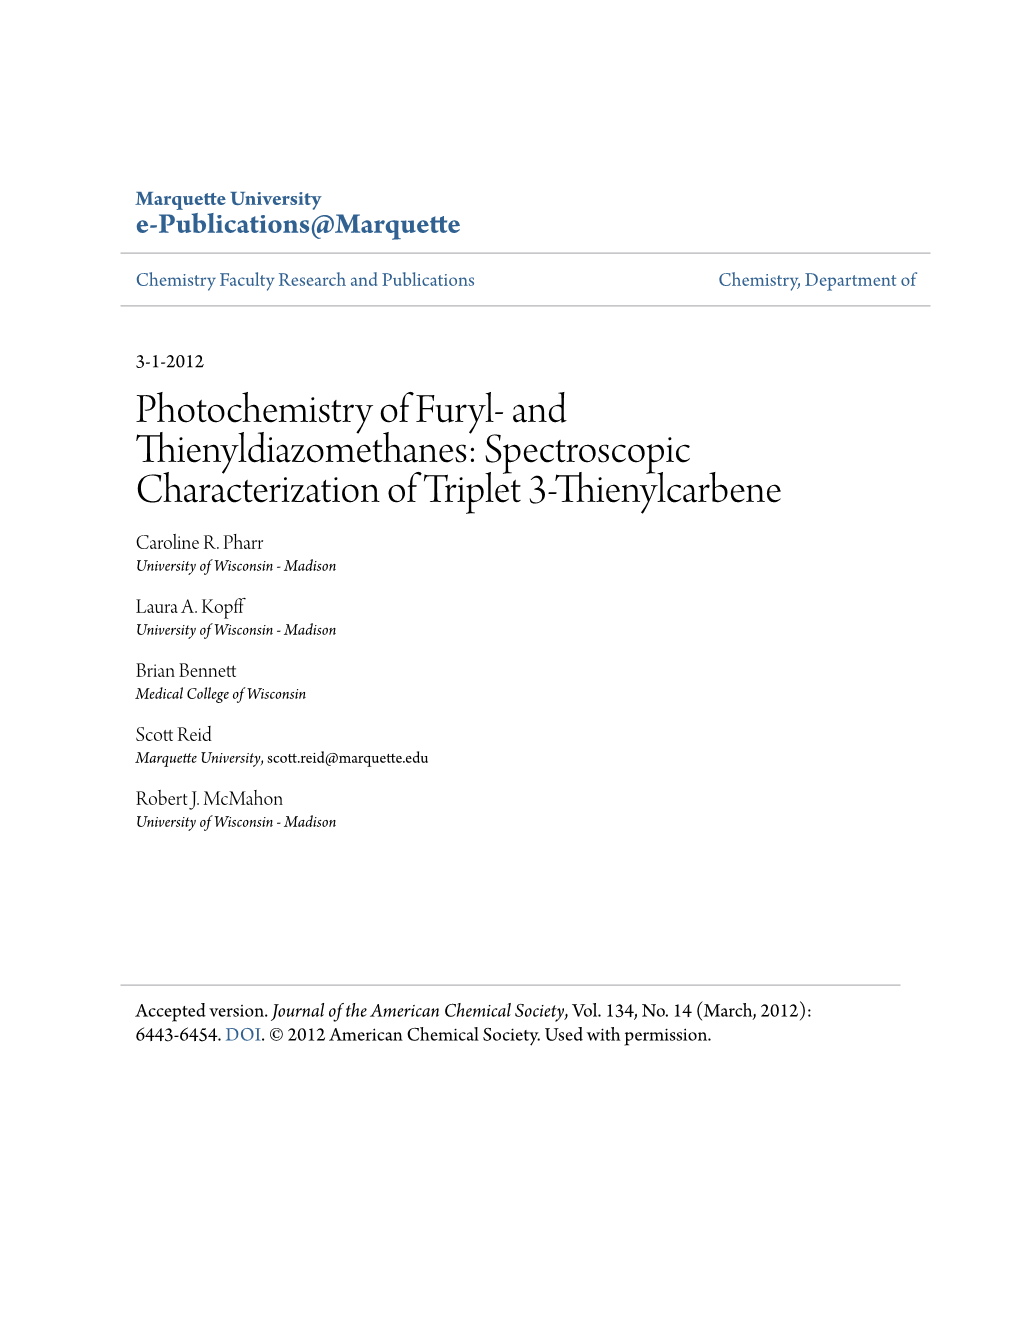 Photochemistry of Furyl- and Thienyldiazomethanes: Spectroscopic Characterization of Triplet 3-Thienylcarbene Caroline R